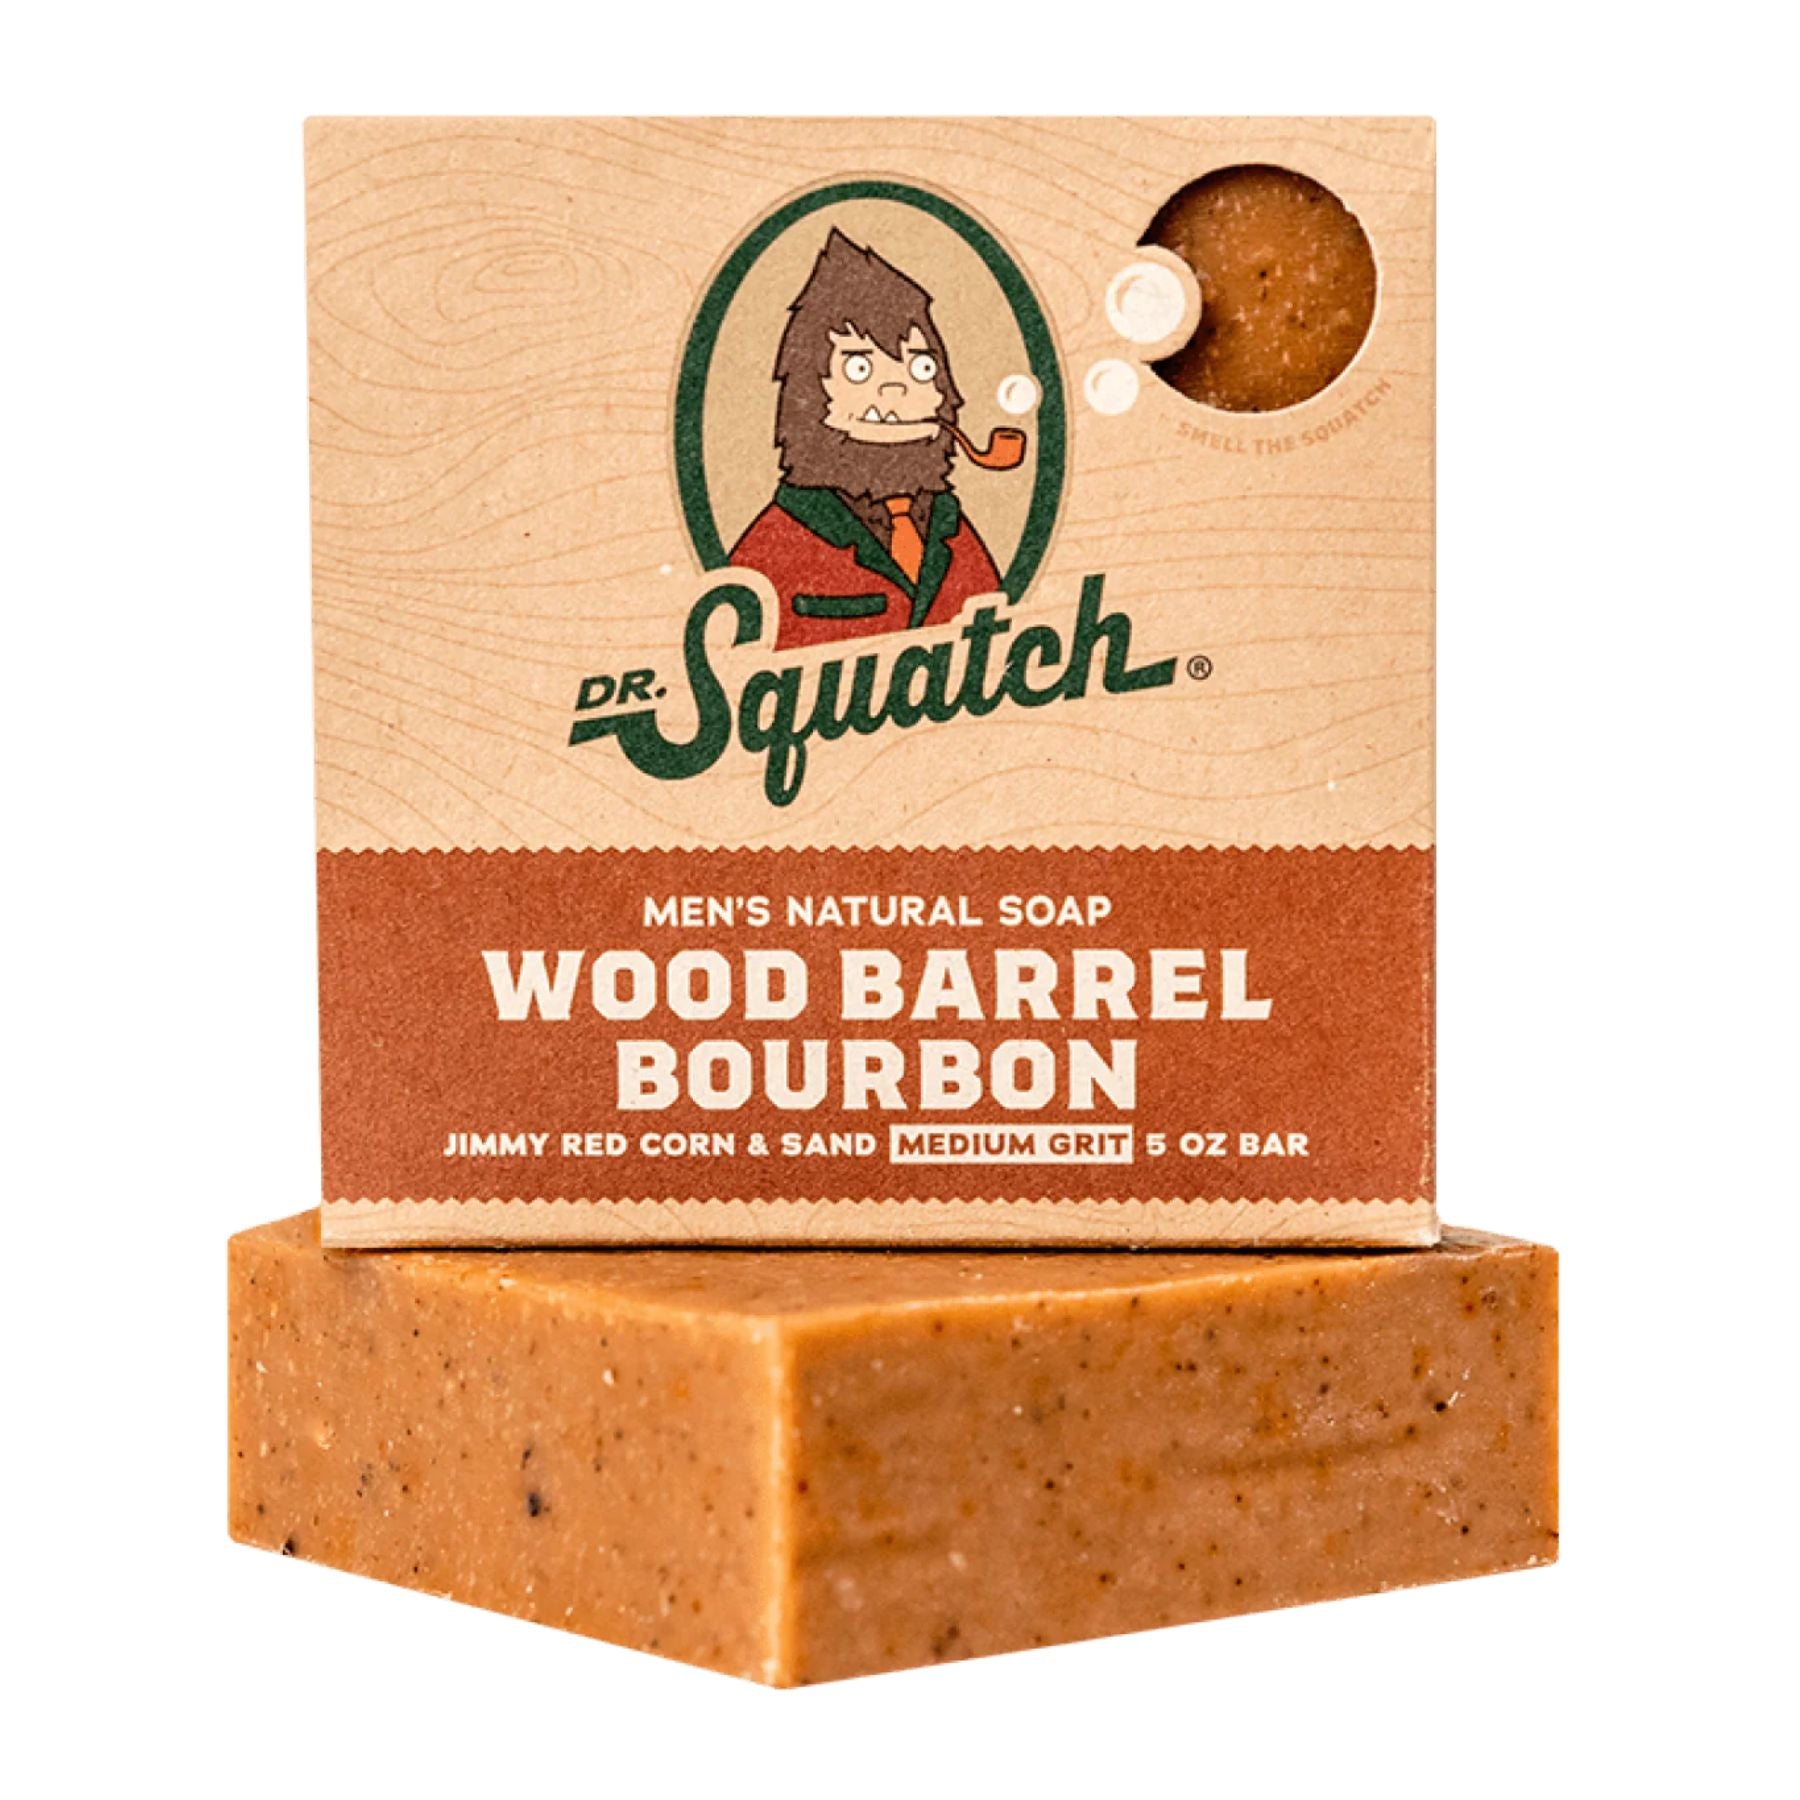 Dr. Squatch Men's Bar Soap Wood Barrel Bourbon 141g